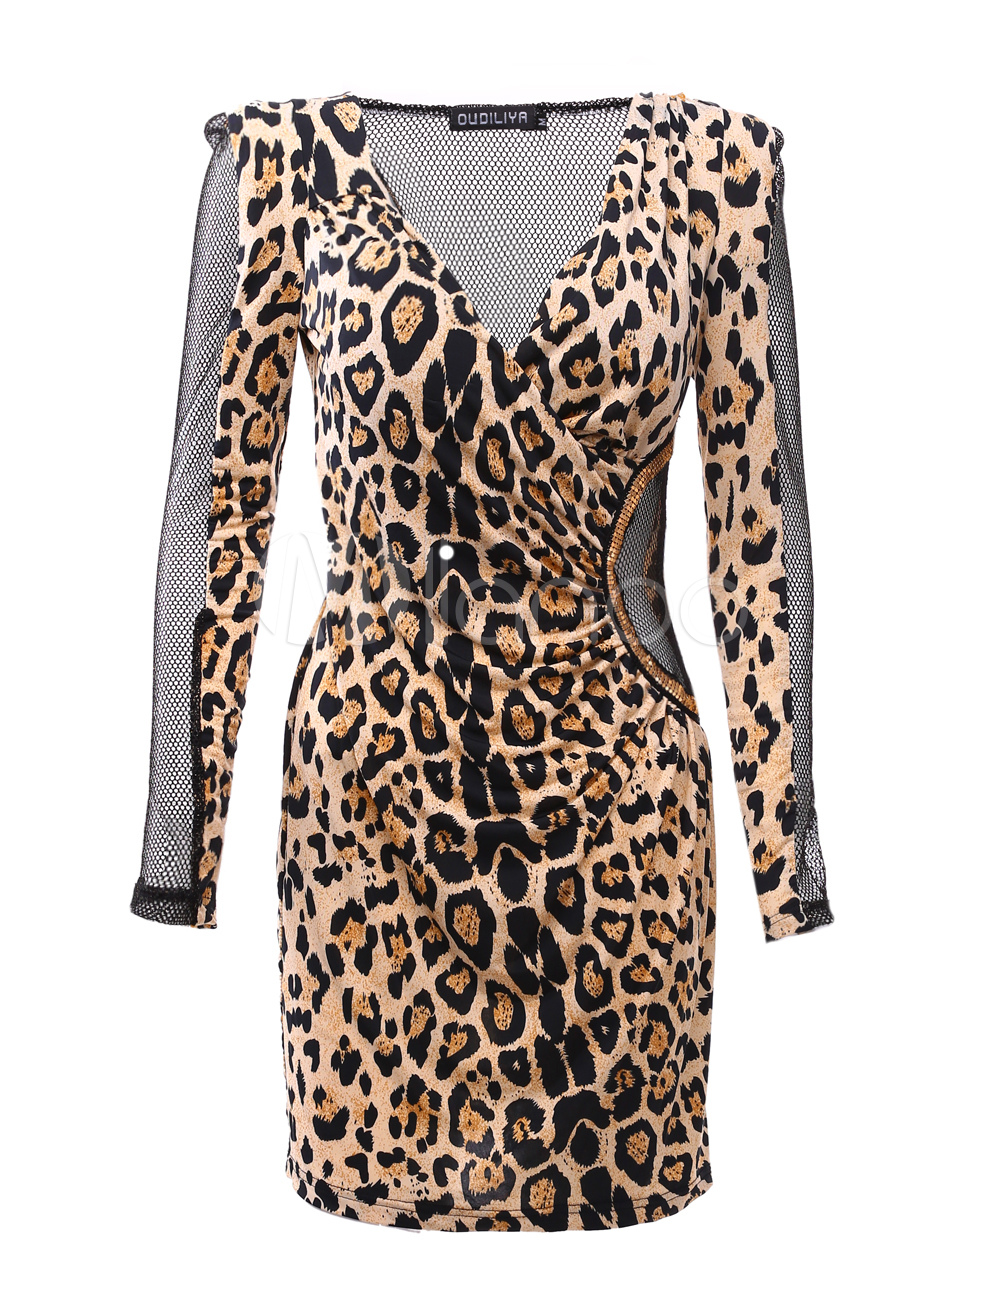 Leopard Print Spandex Bodycon Dress For Women